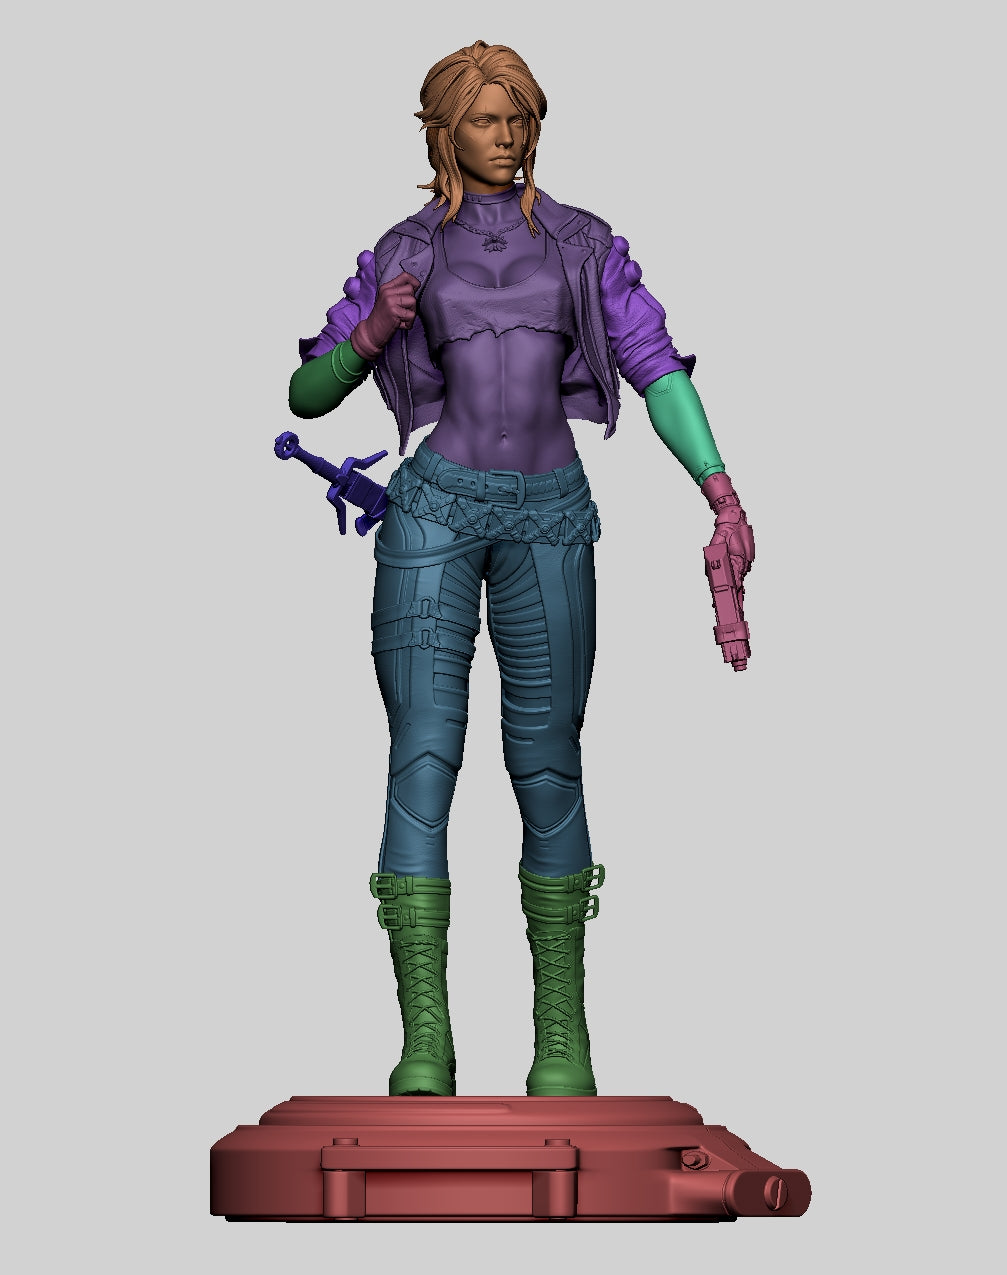 Cyberpunk Ciri imprimé en 3D Miniature Scale Statue Figure SFW NSFW